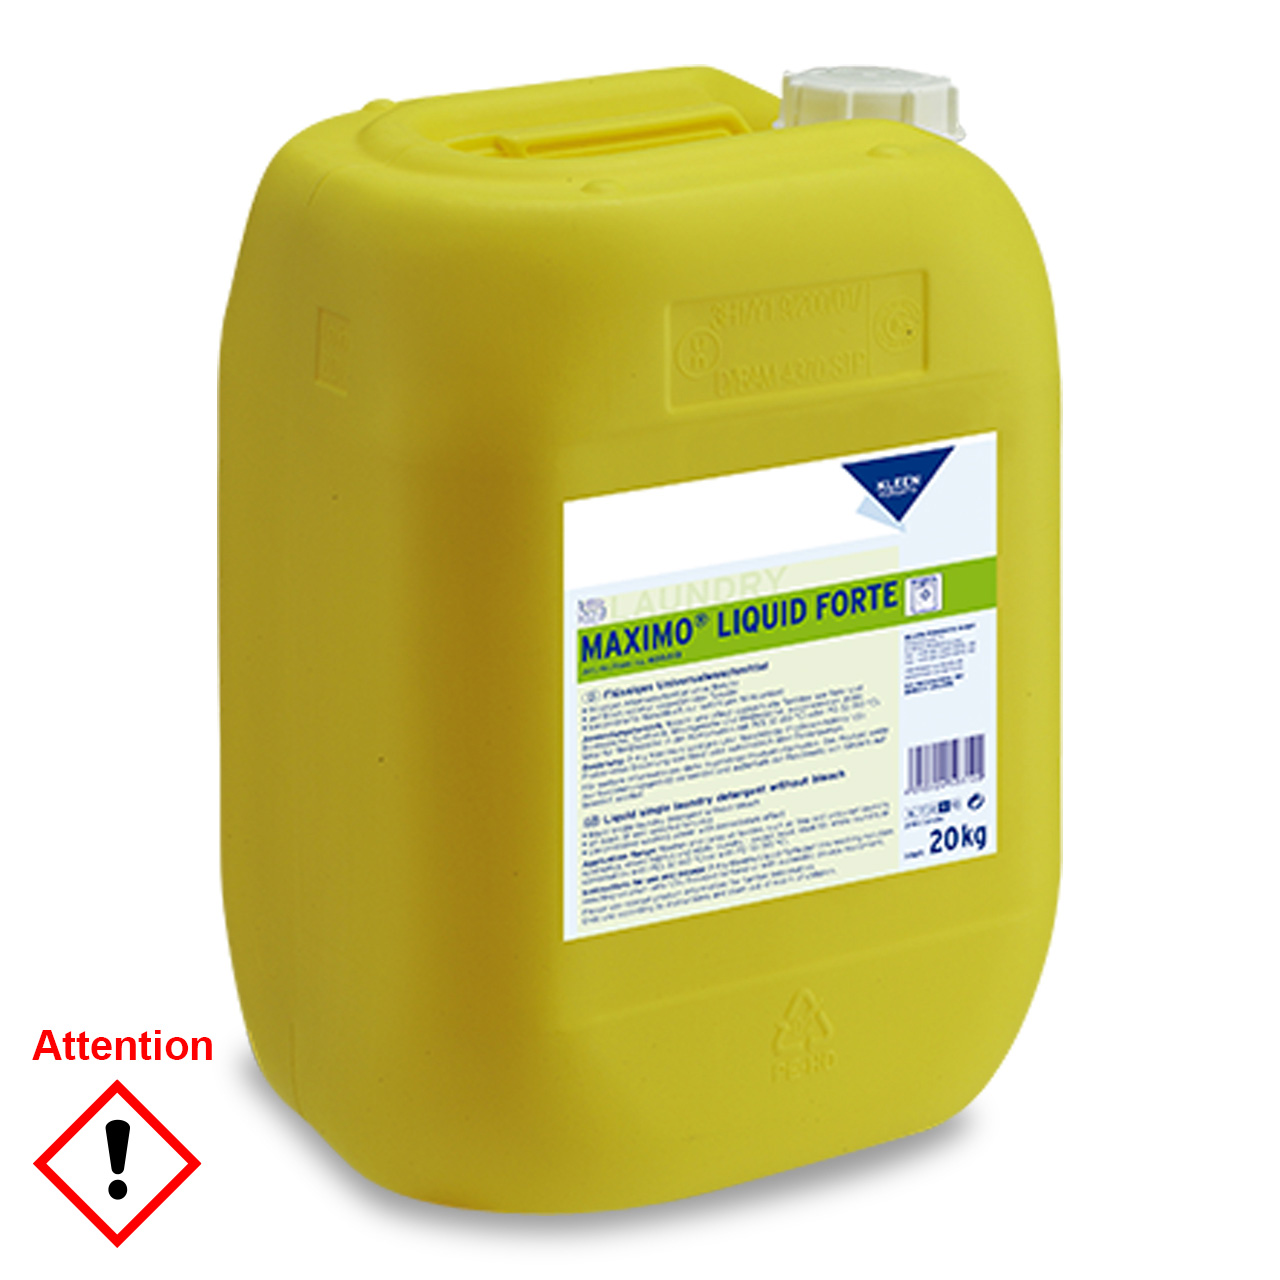 Maximo Liquid Forte, Vollwaschmittel, 20 kg